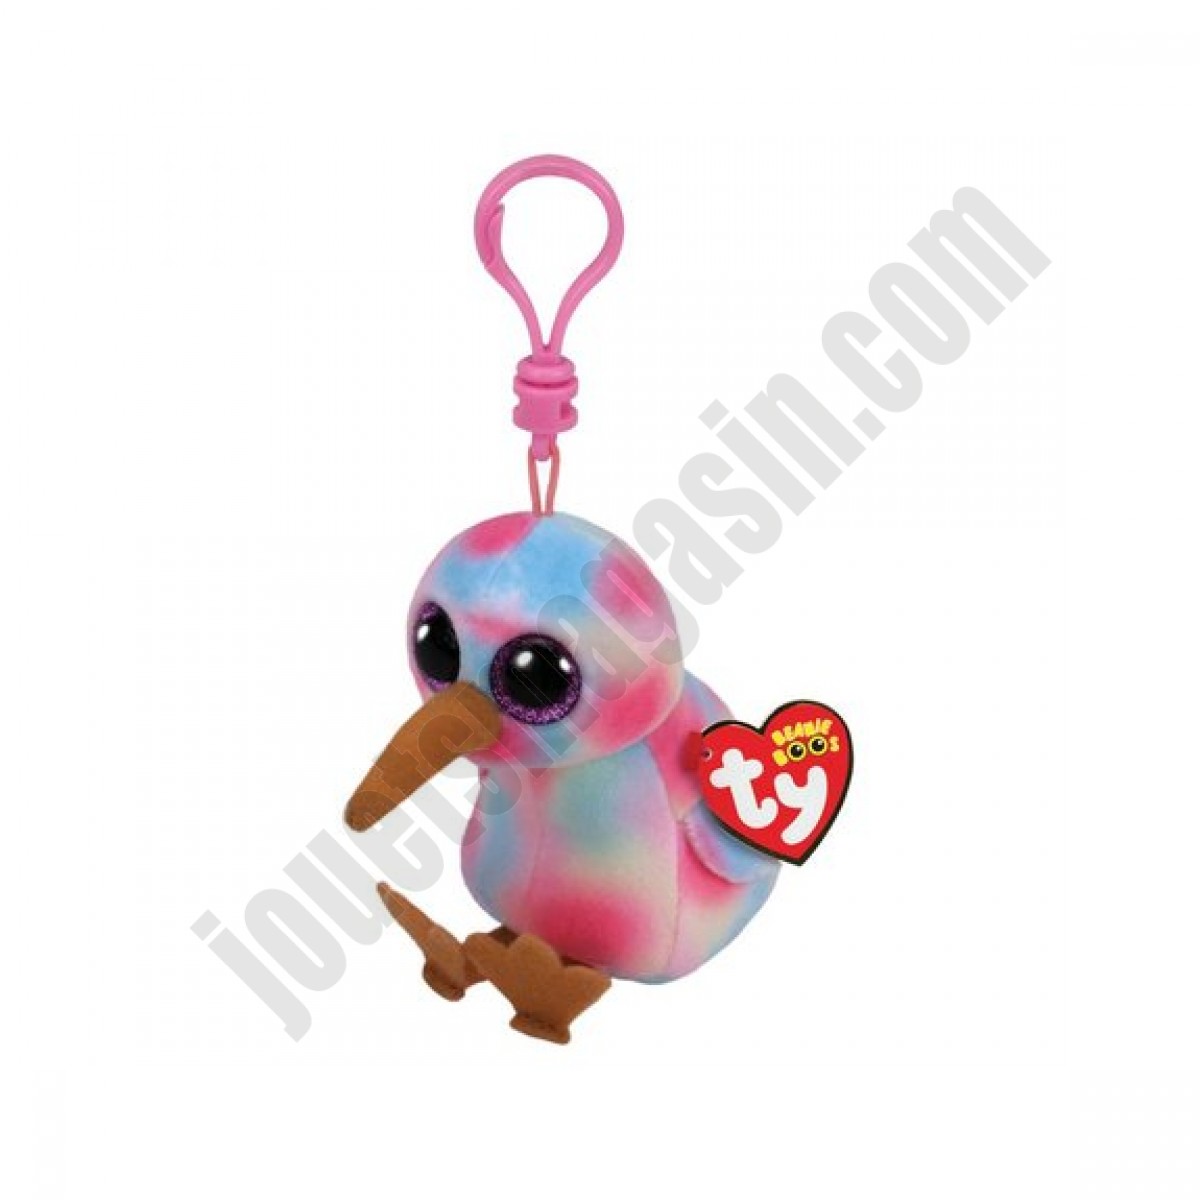 Beanie Boo's - Porte-clés Kiwi l'oiseau multicolore ◆◆◆ Nouveau - Beanie Boo's - Porte-clés Kiwi l'oiseau multicolore ◆◆◆ Nouveau